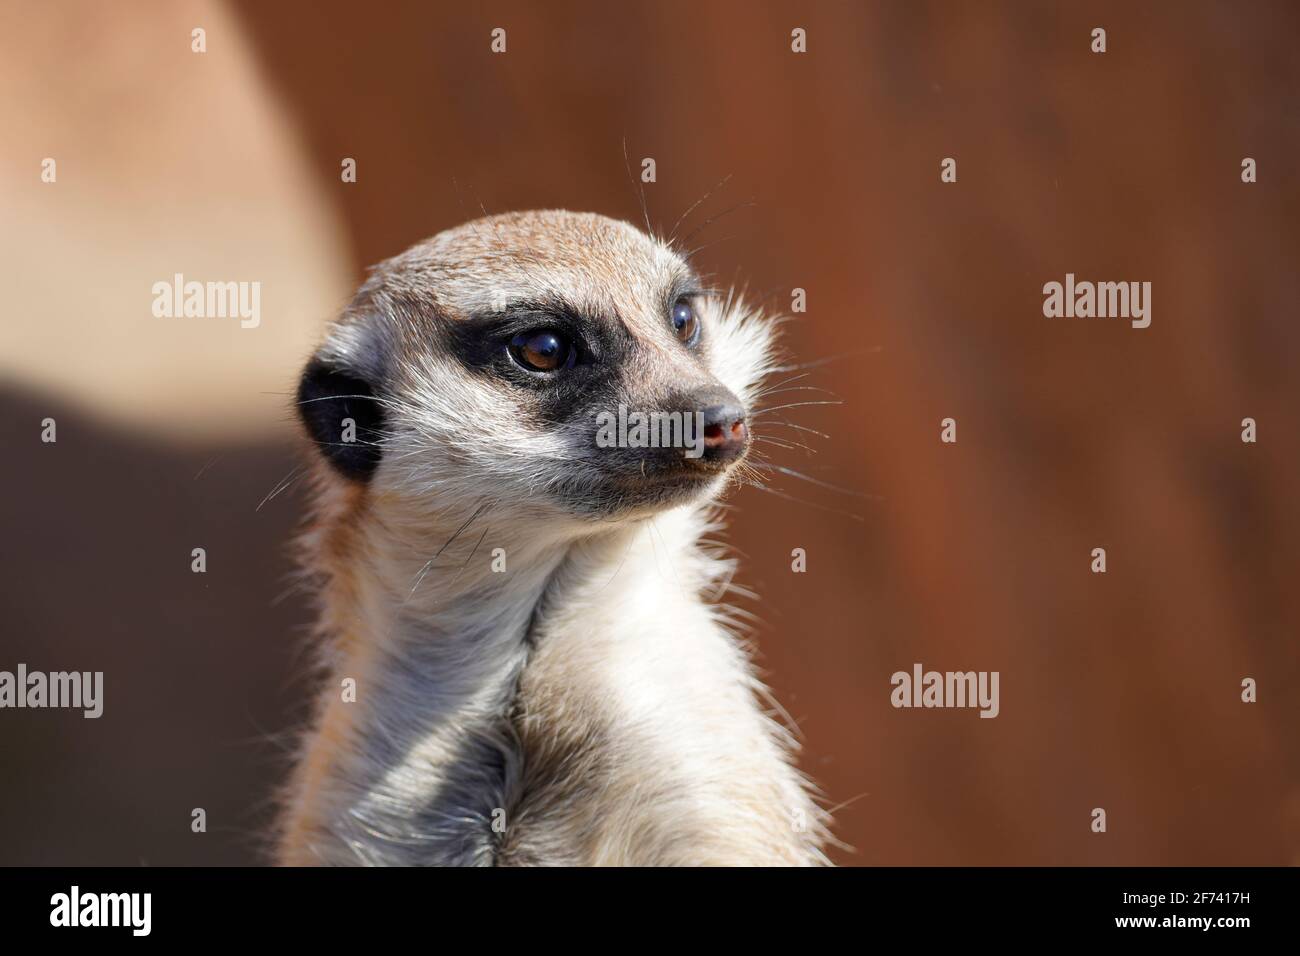 Portrait of a meerkat. Suricata suricatta. Animal looks around vigilantly and keeps watch. Mammal with brown fur. Mongoose family. Stock Photo